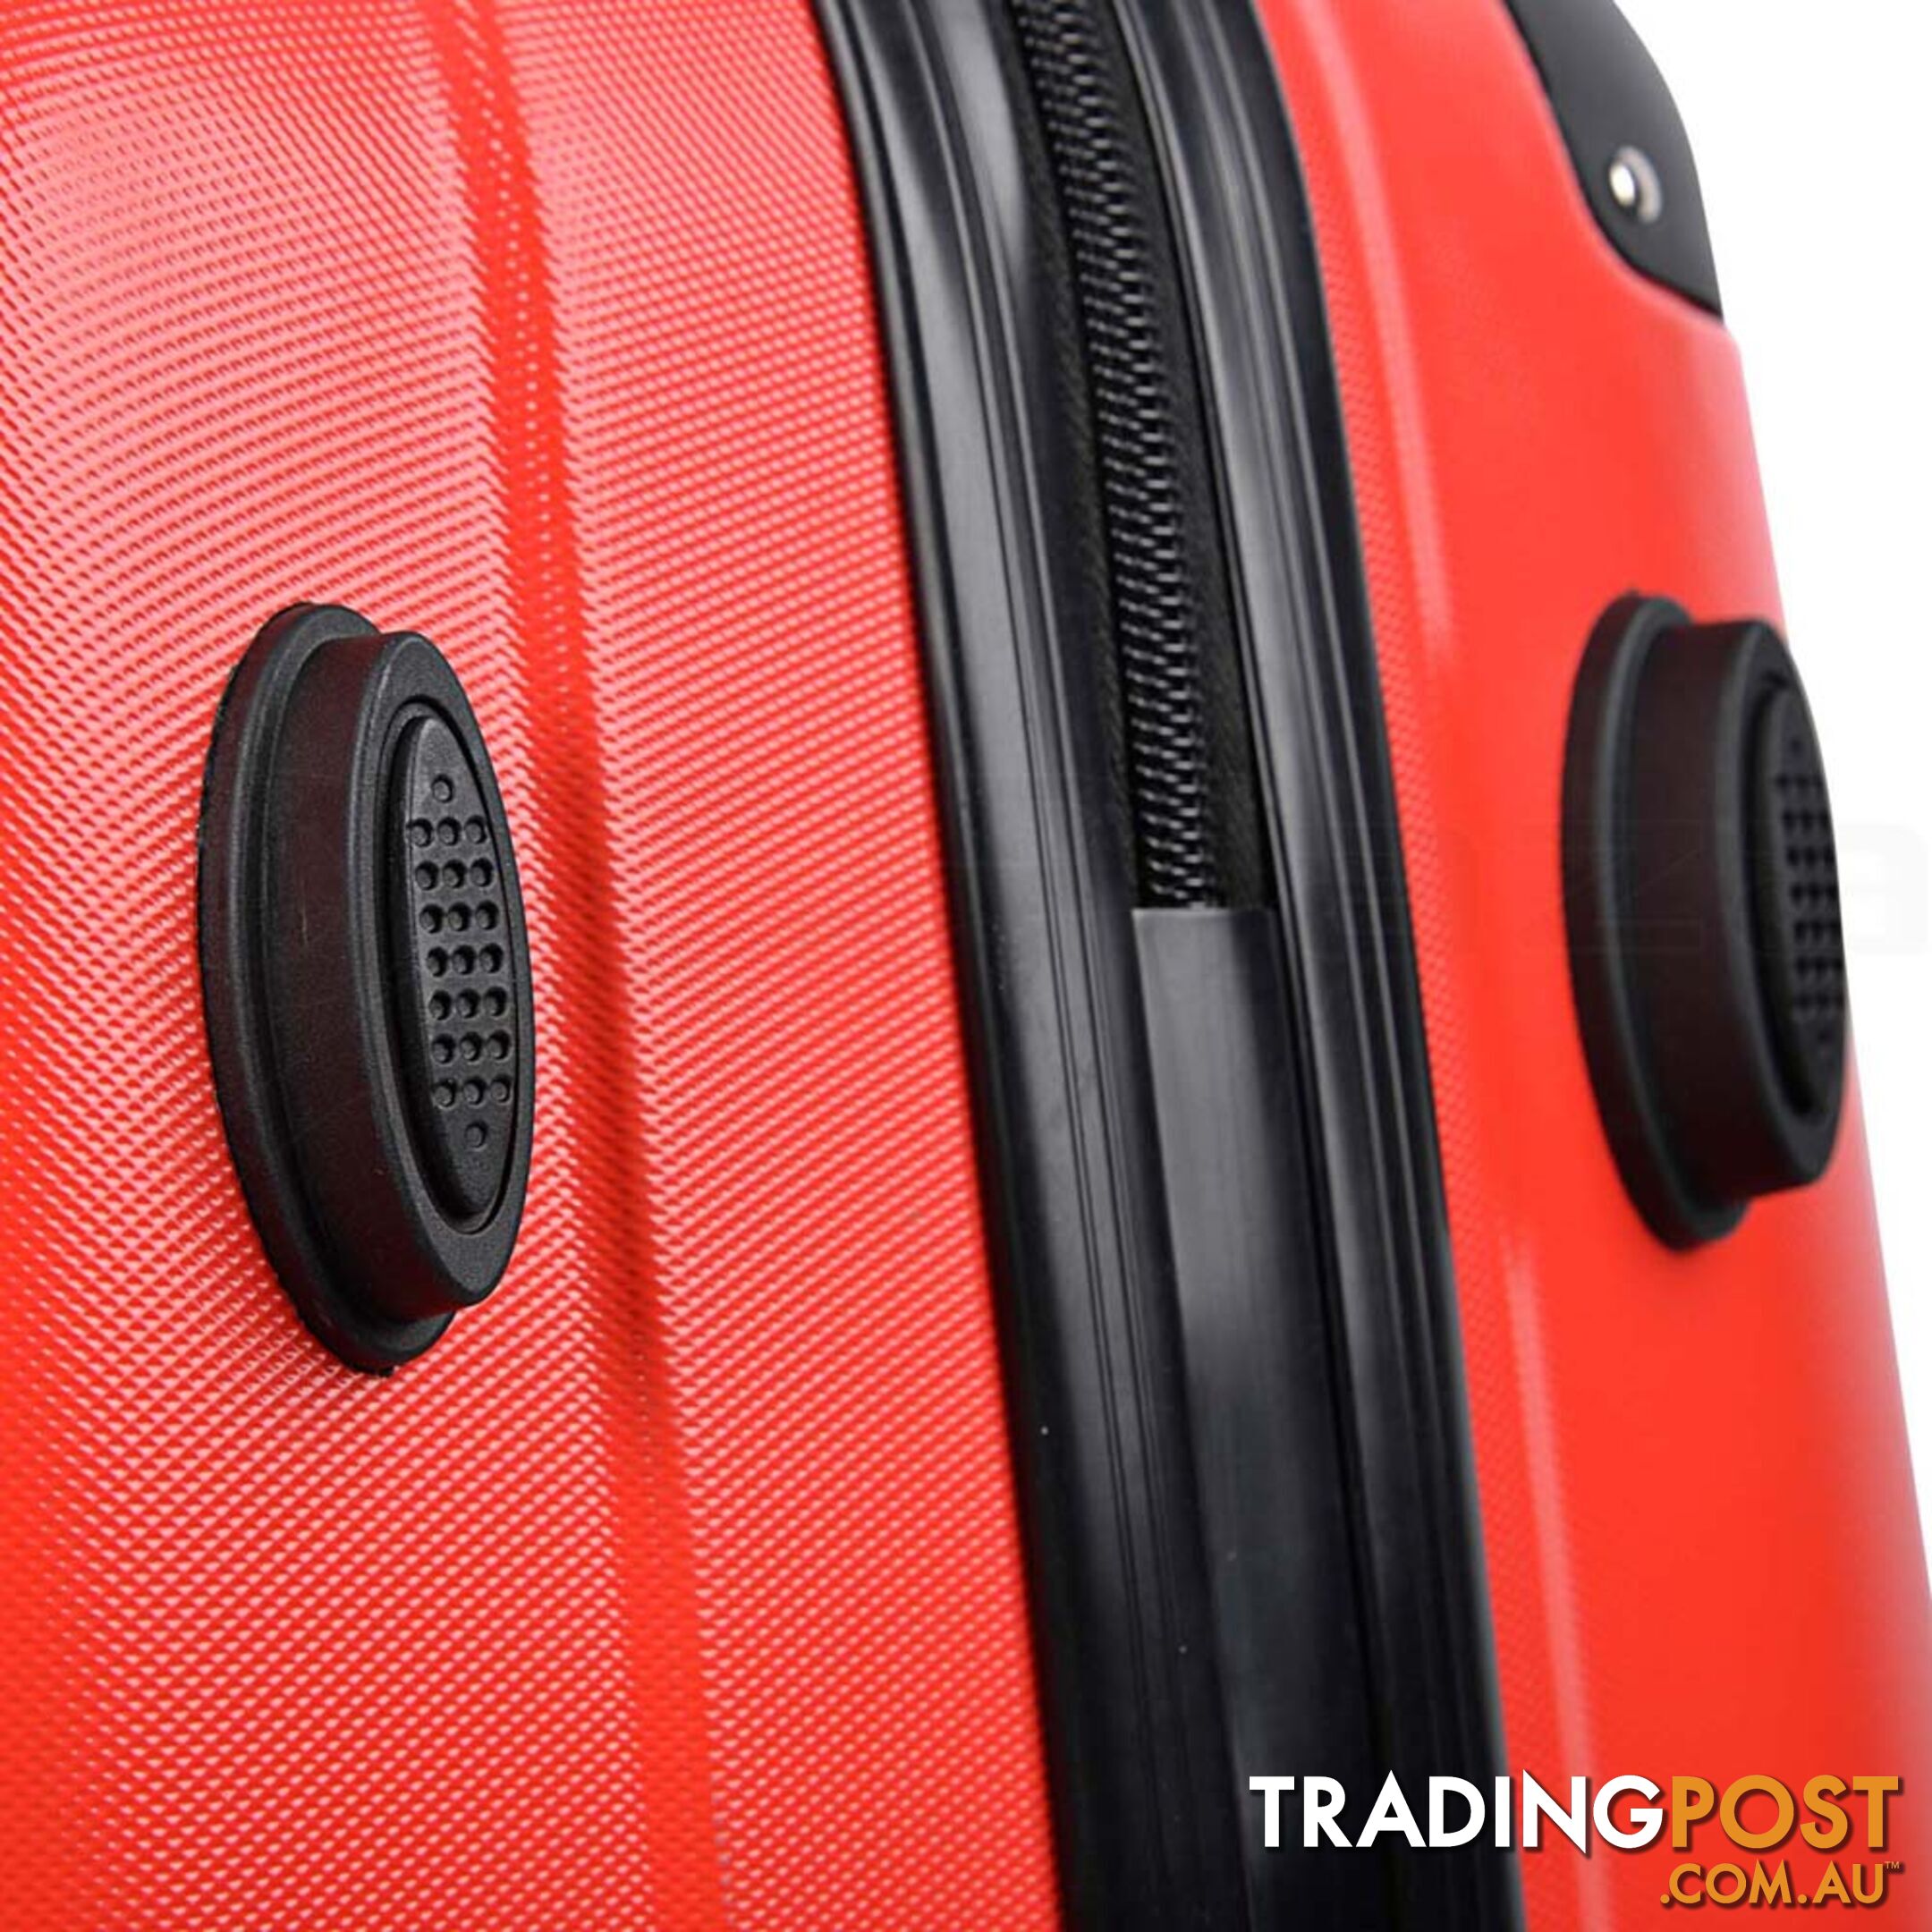 2PCS Luggage Set Hard Shell 4 Wheels Suitcase TSA Lock Travel Carry On Bag Red